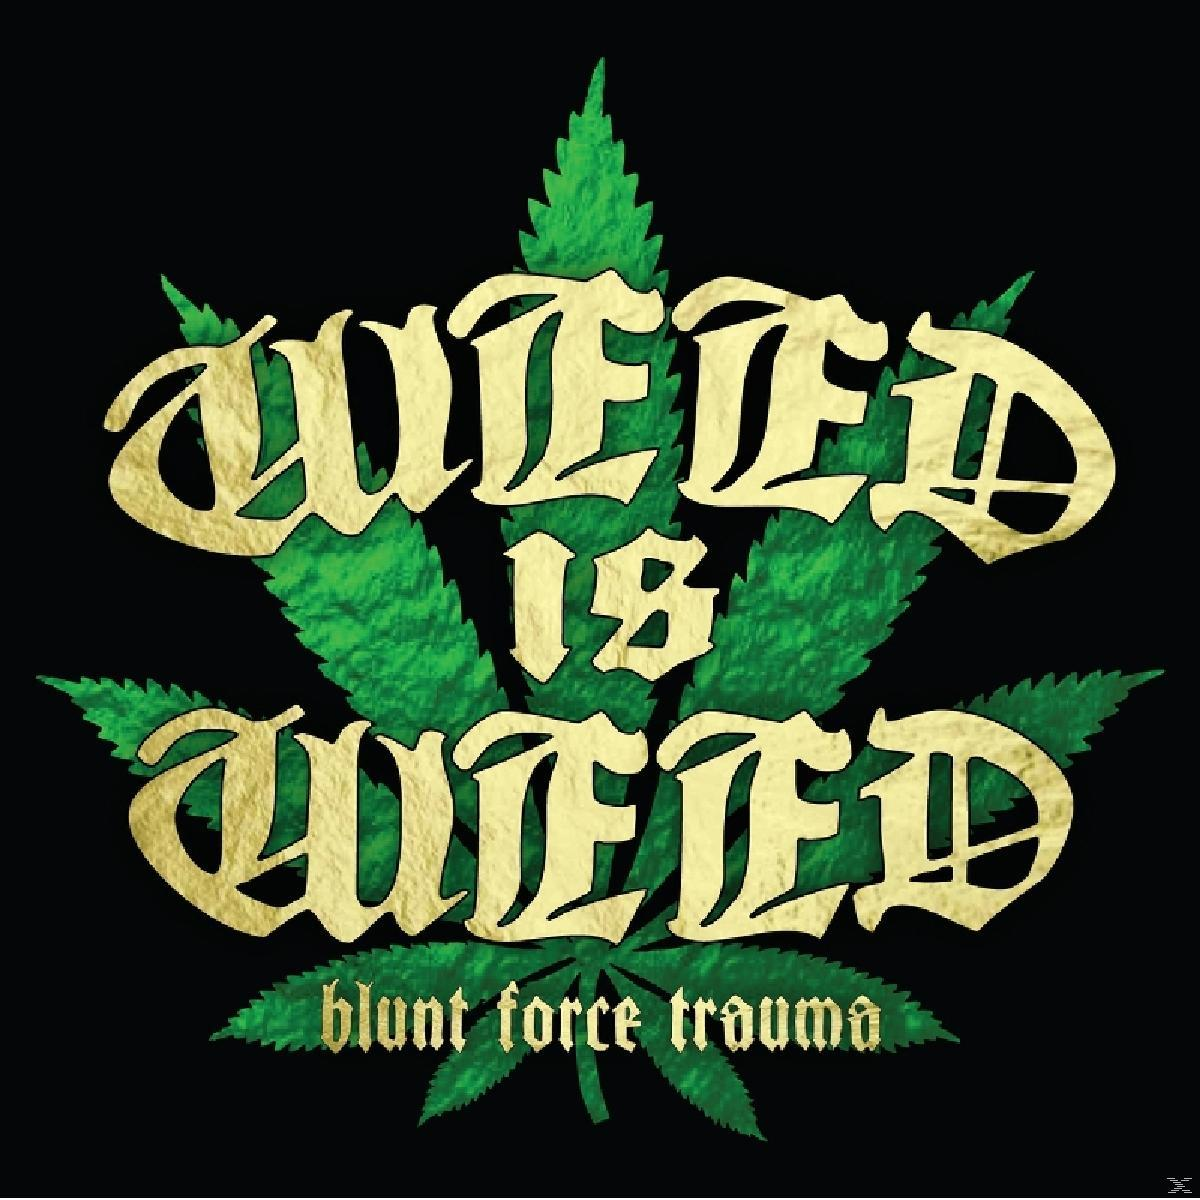 (CD) Trauma - Weed - Weed Force Is Blunt